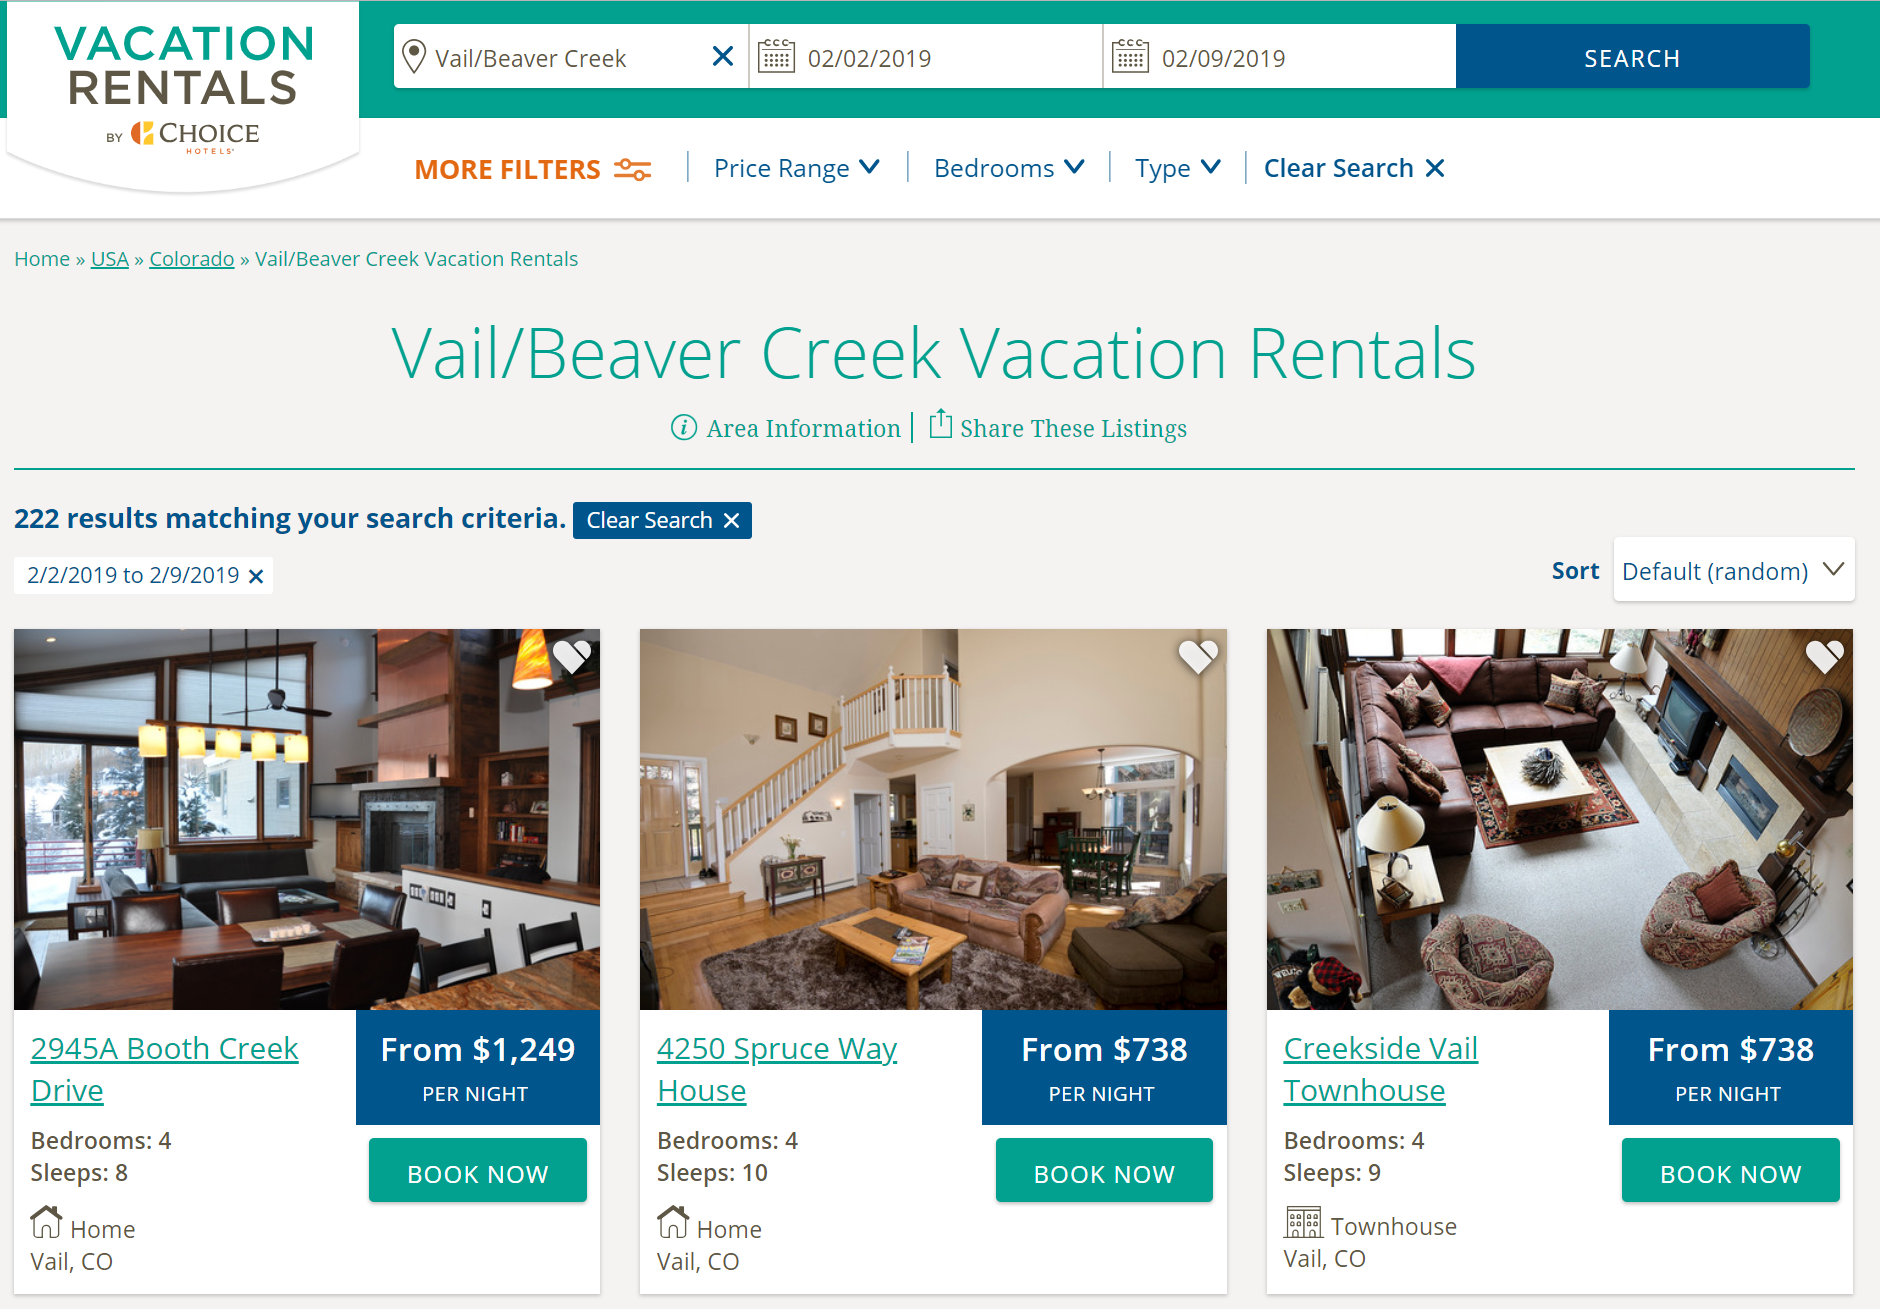 Vacation Rentals by Choice Hotels 10,000 bonus points | Loyalty Traveler1880 x 1309